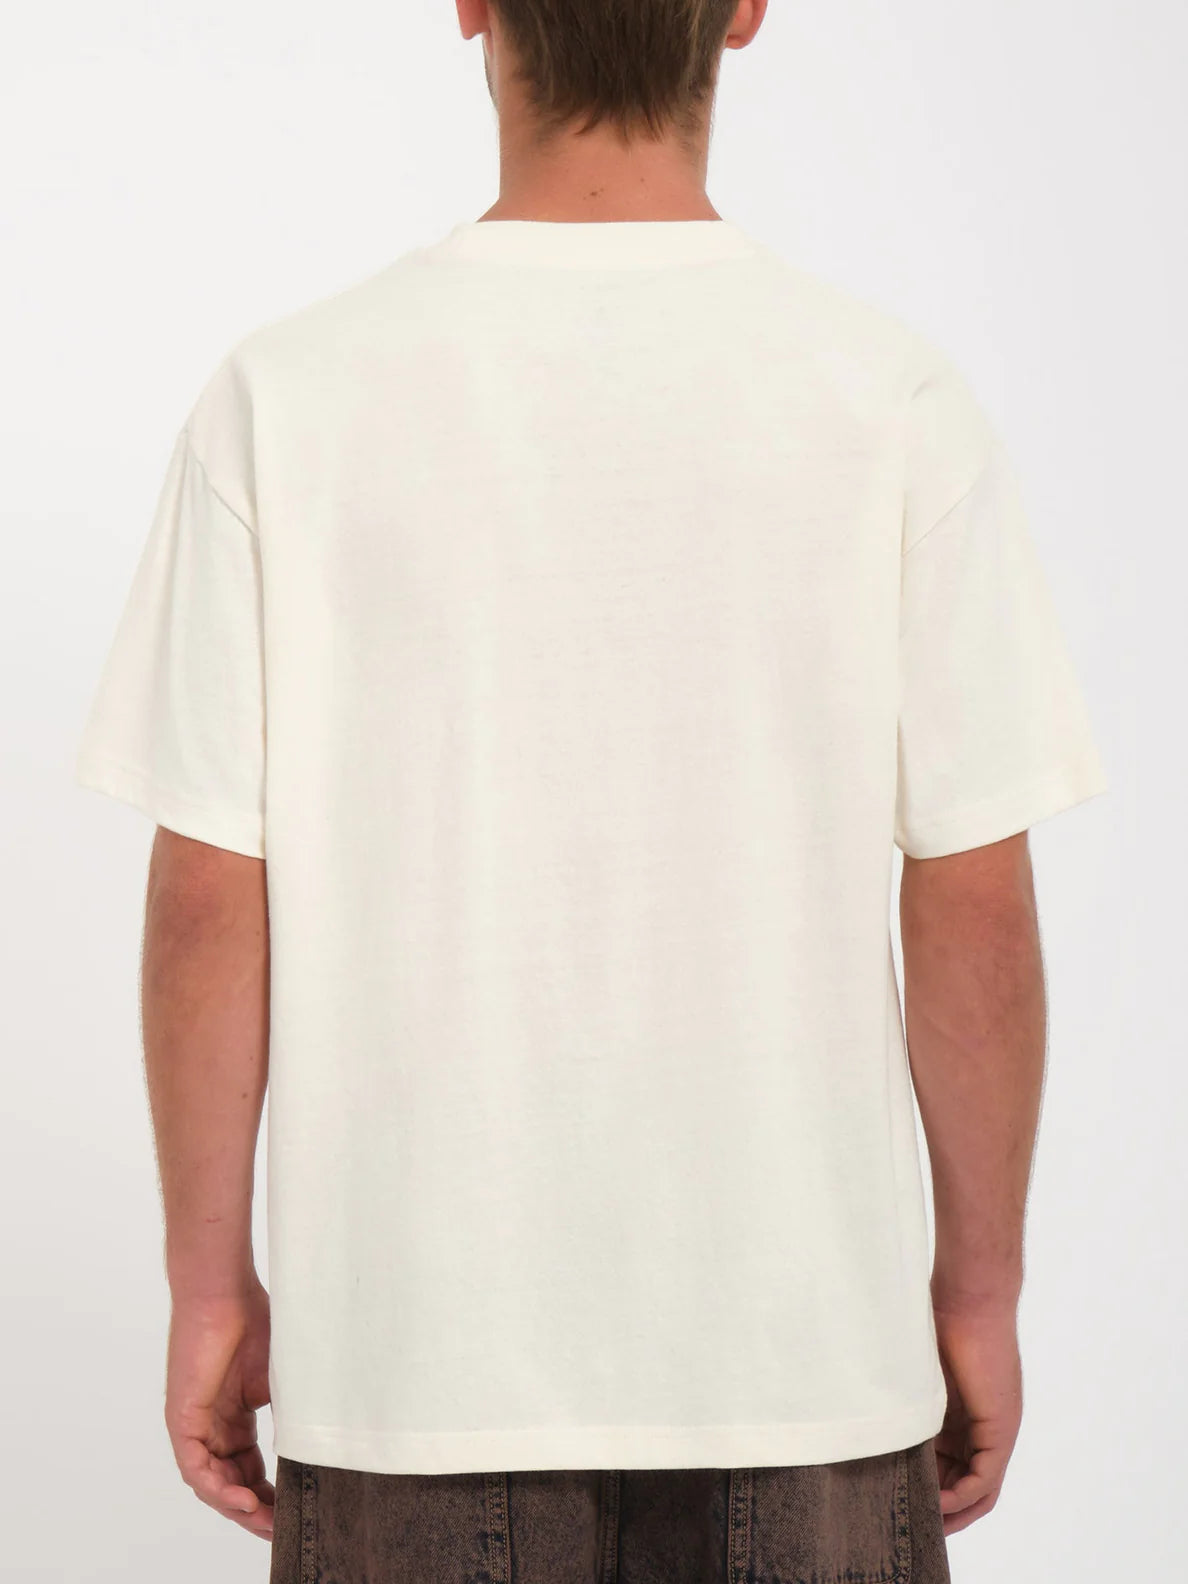 Camiseta Volcom Balislow - Dirty White